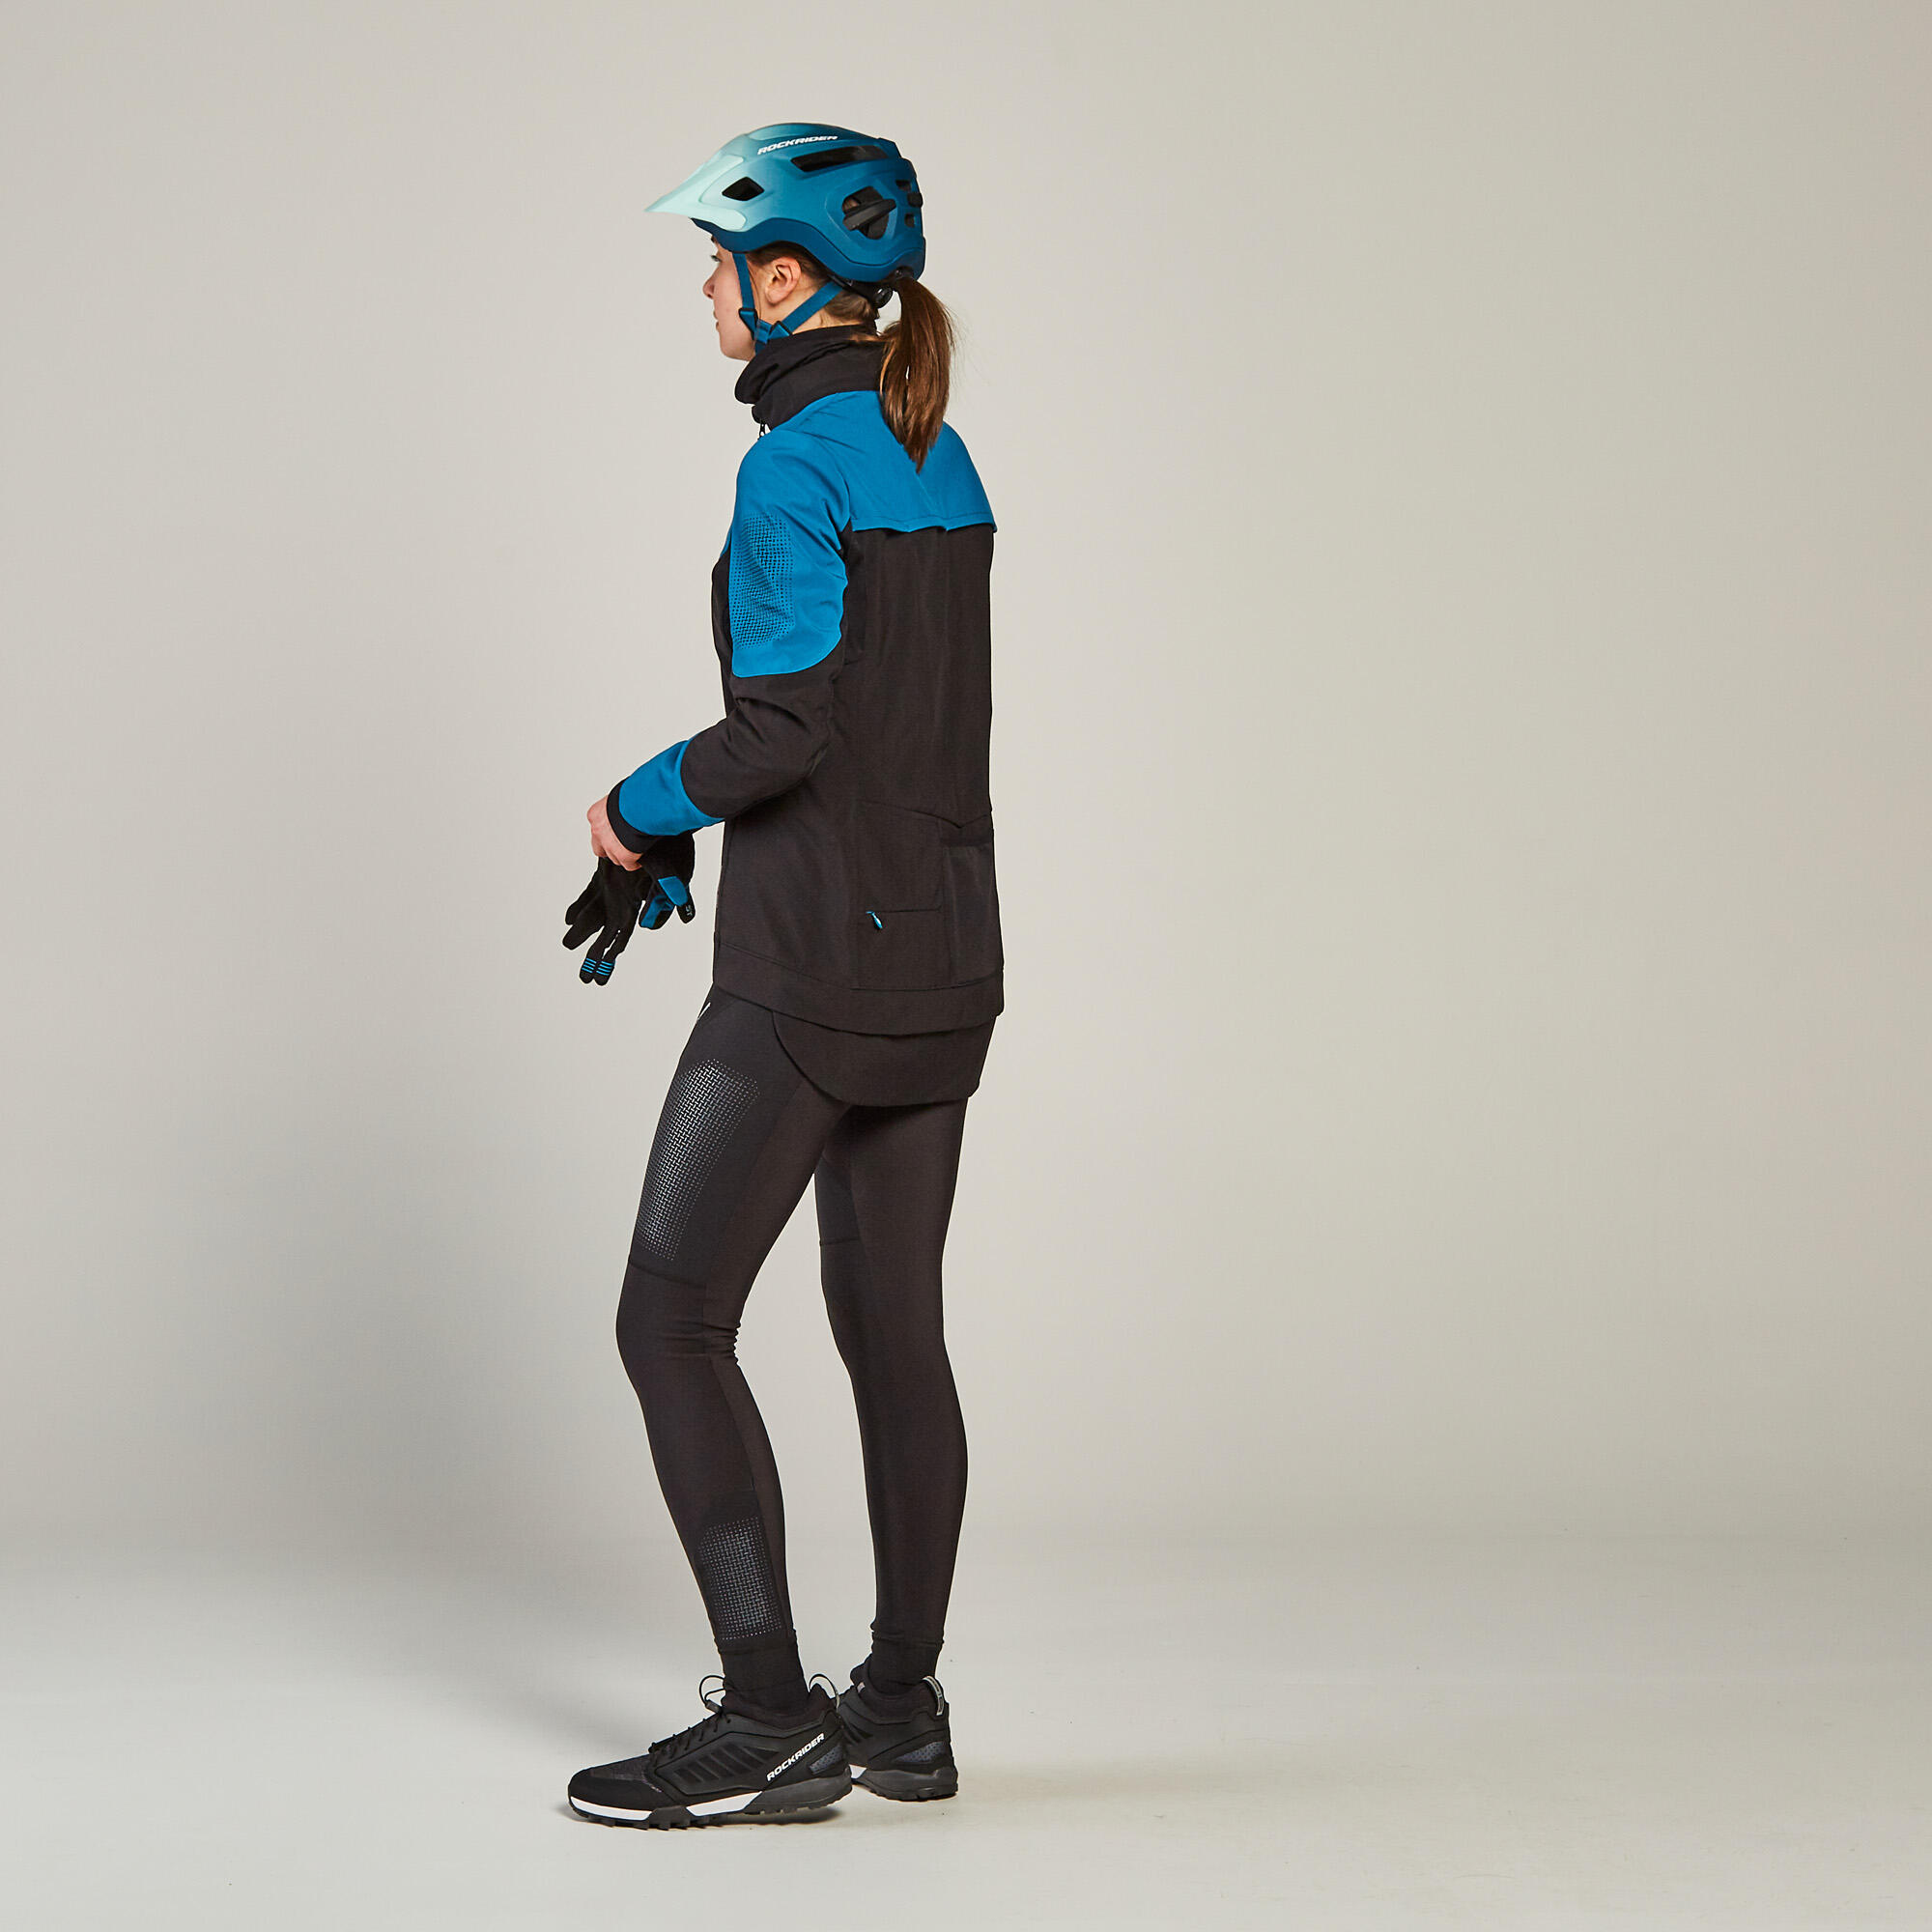 Women's Winter Mountain Bike Jacket - Turquoise/Black 4/19